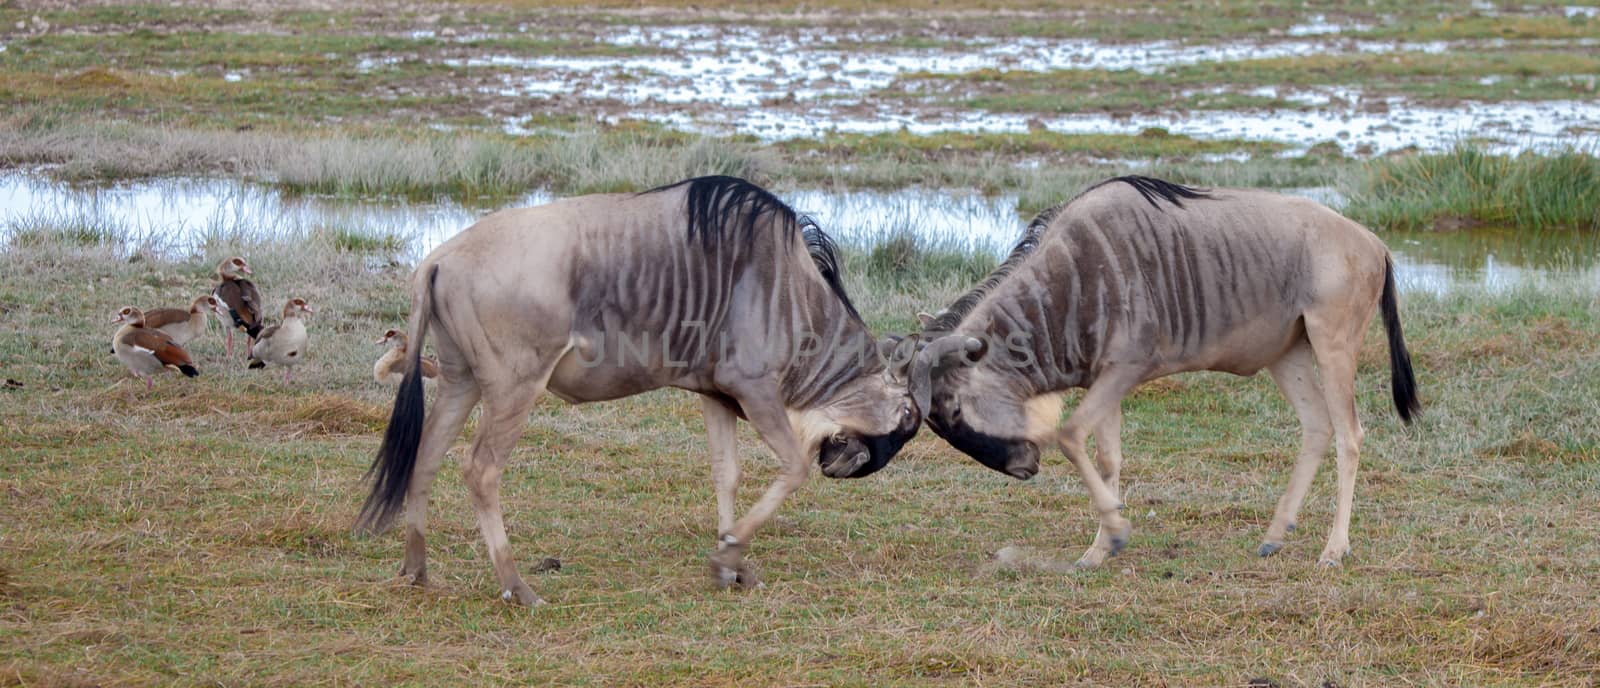 Two antelopes battle in the savannah of Kenya